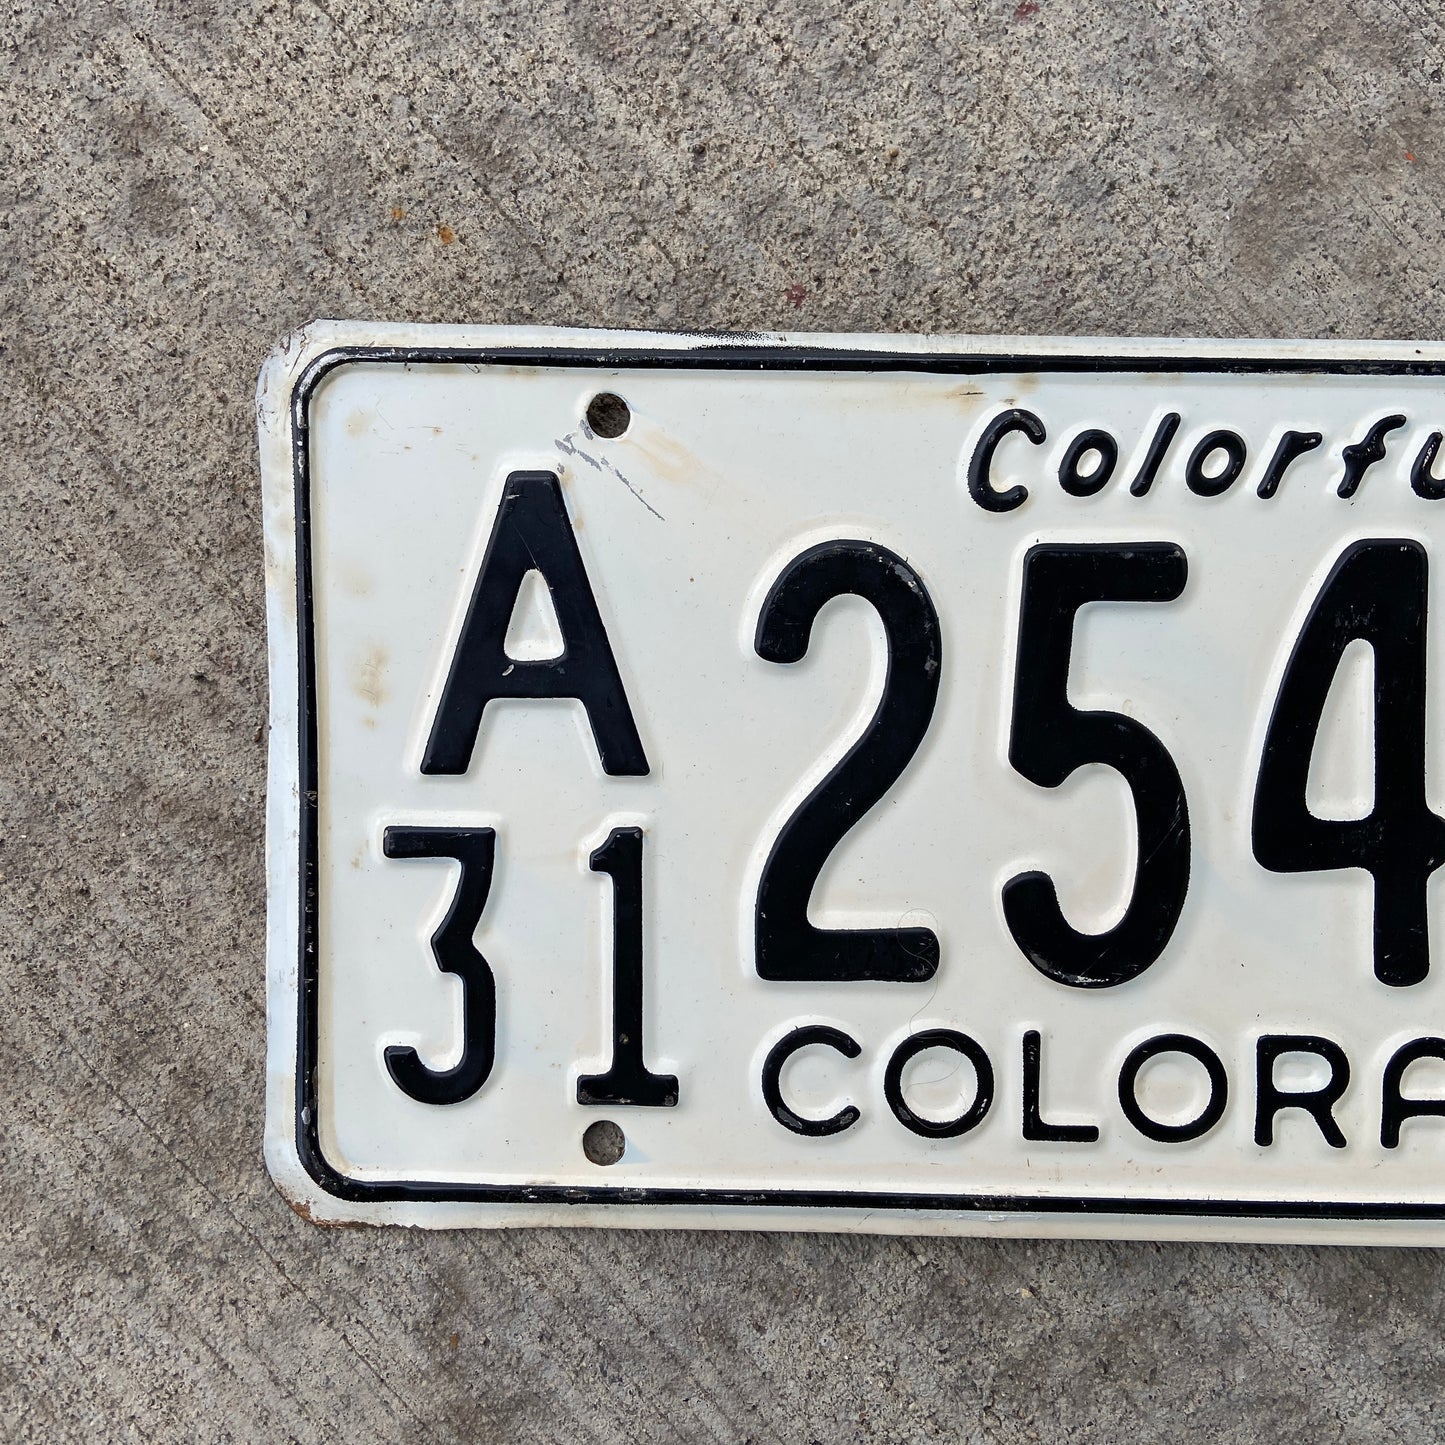 1955 Colorado License Plate Vintage Black White Wall Decor